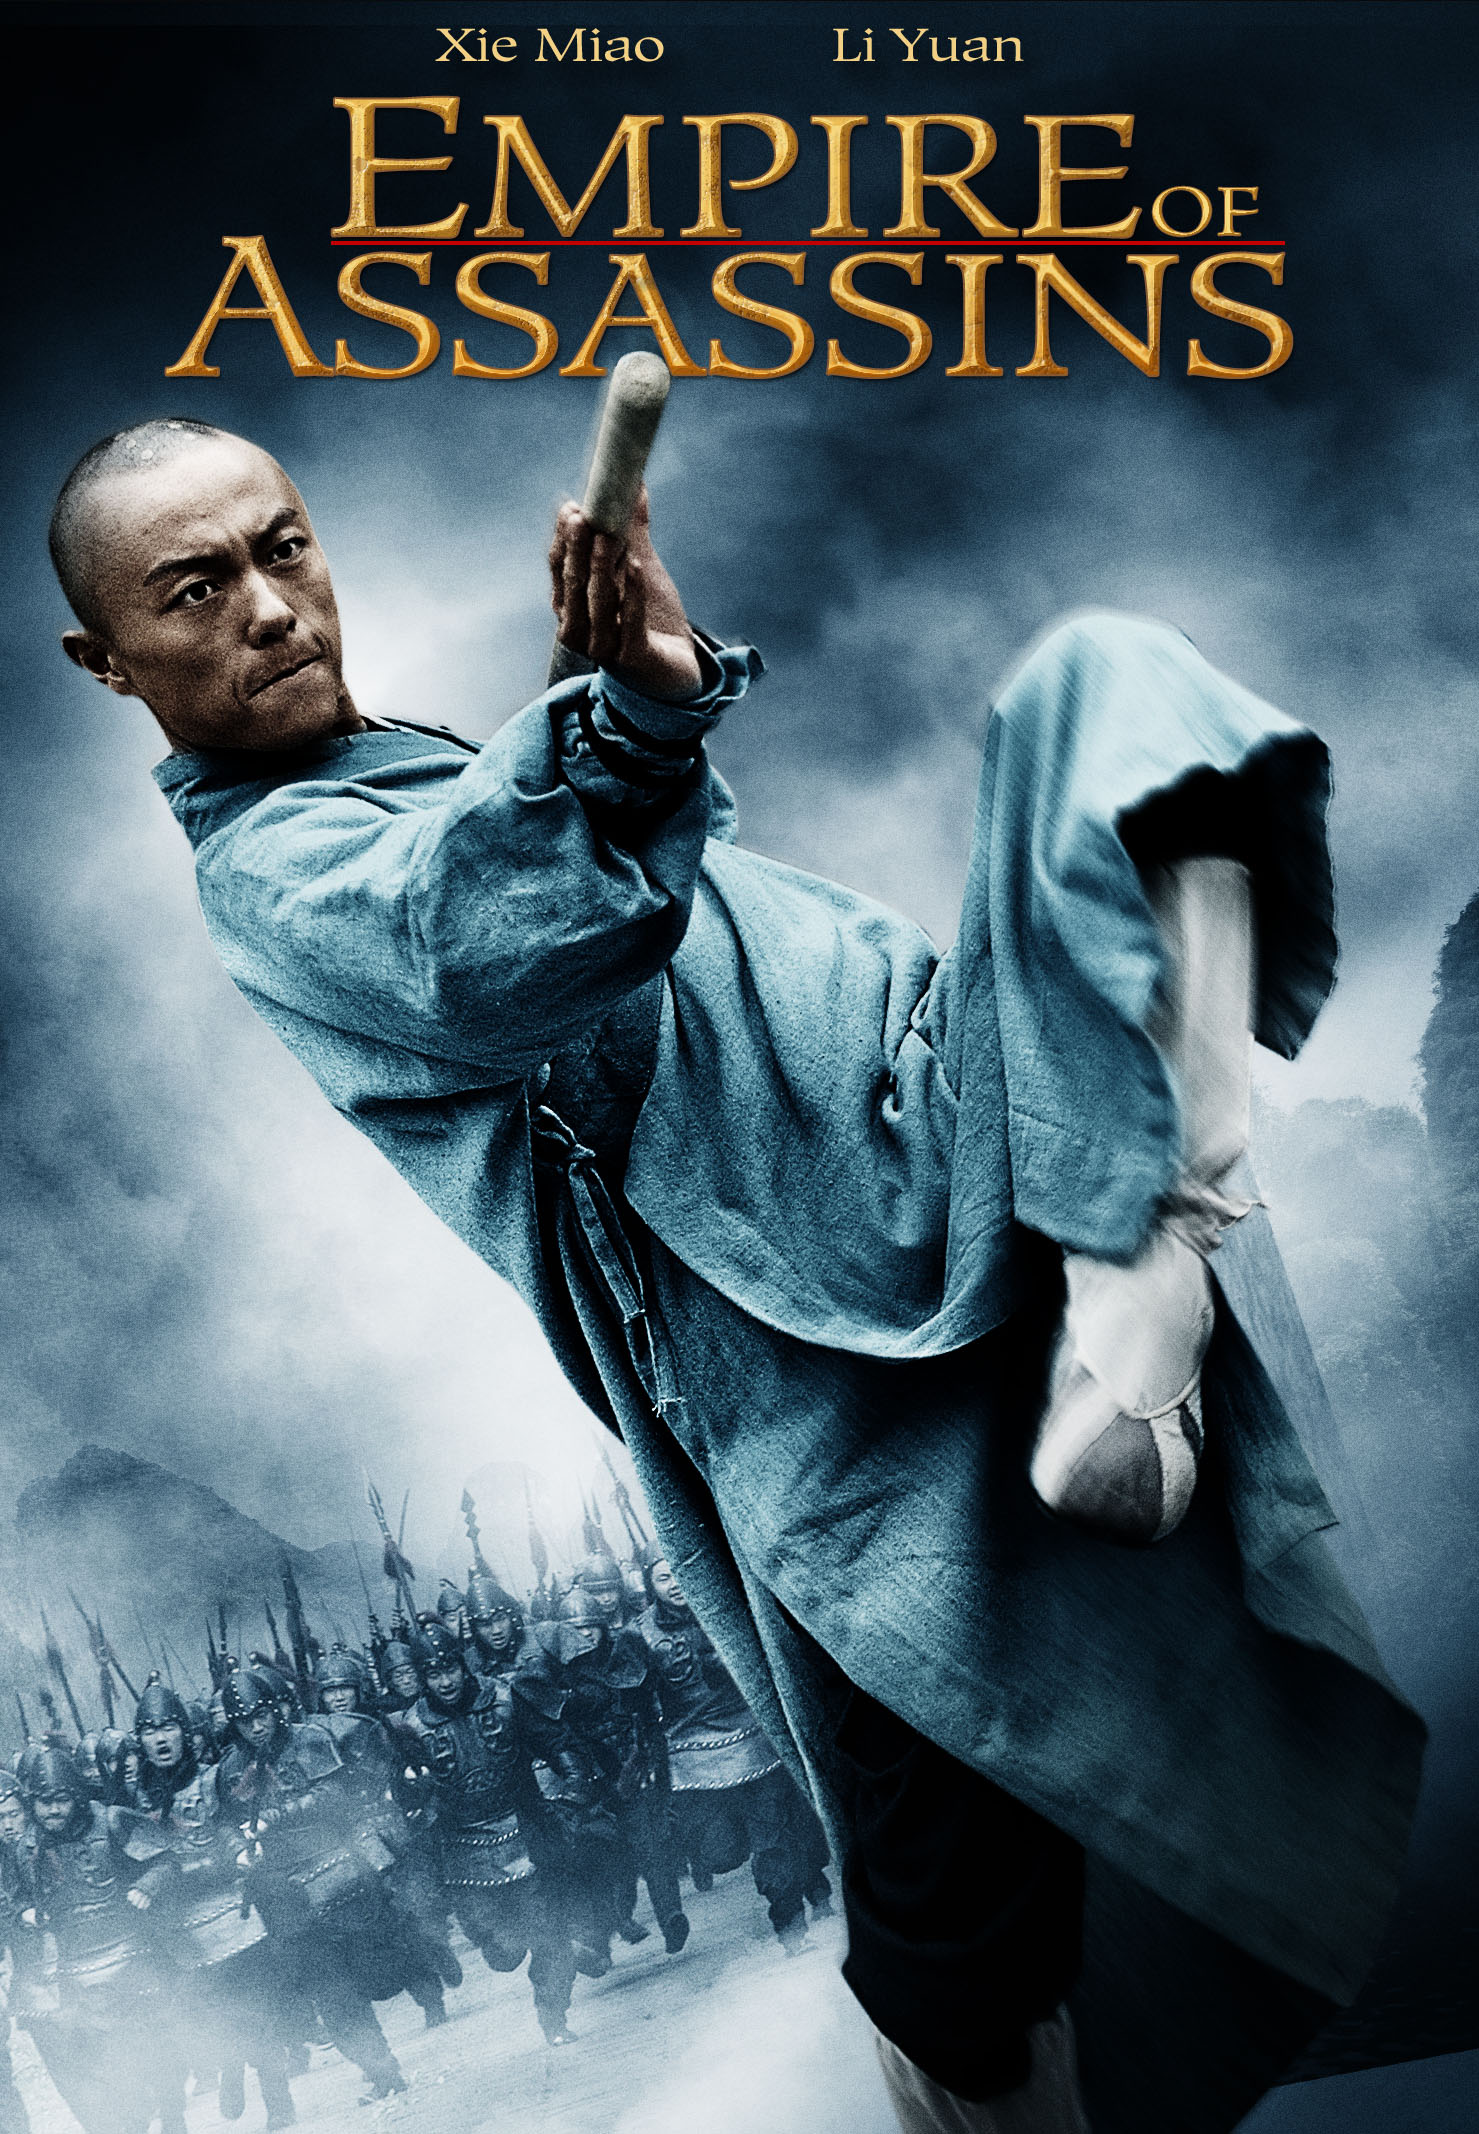 Empire of Assassins movie